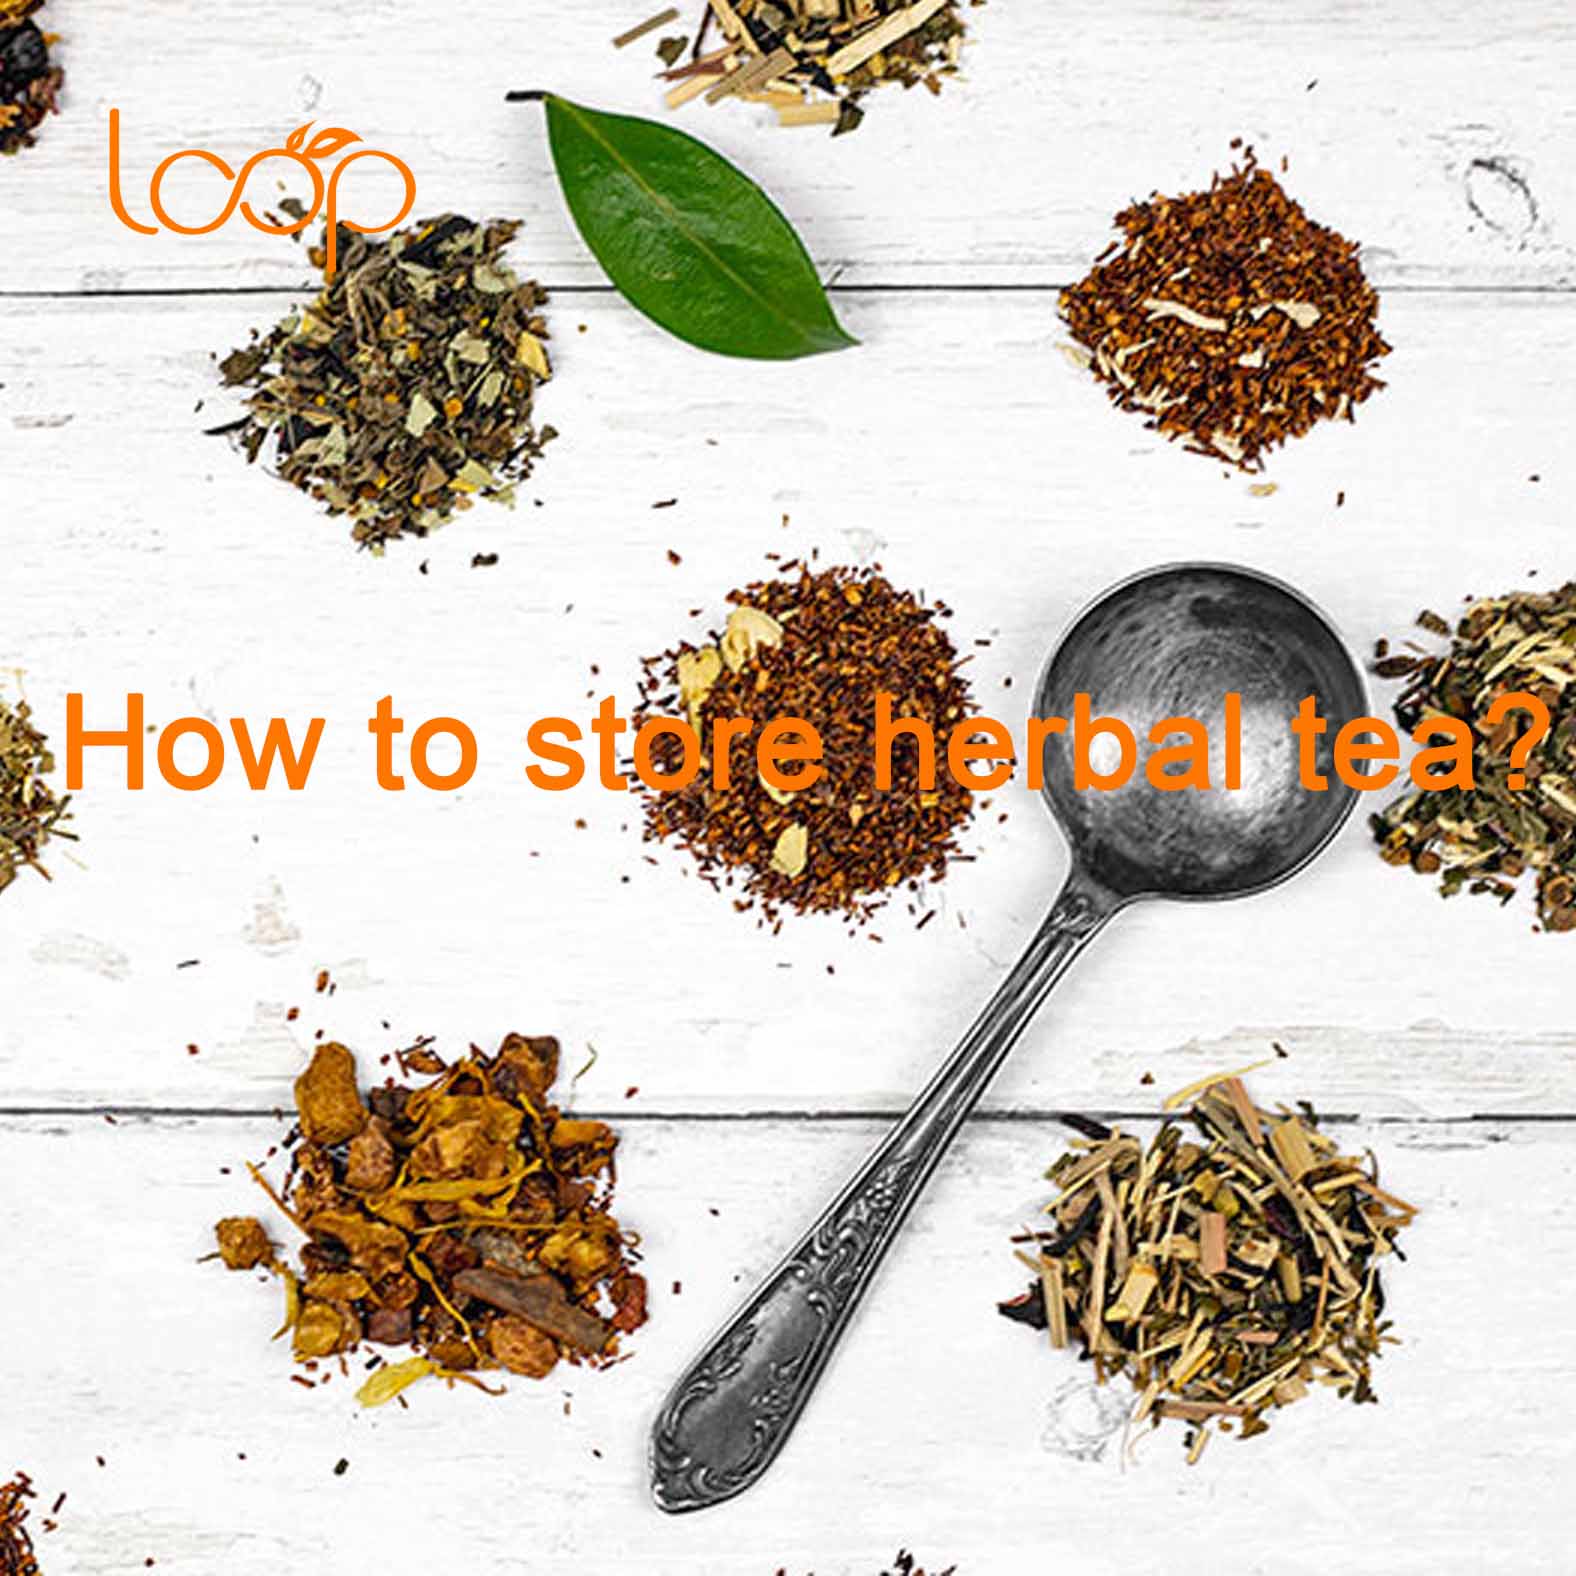 How to store herbal tea?